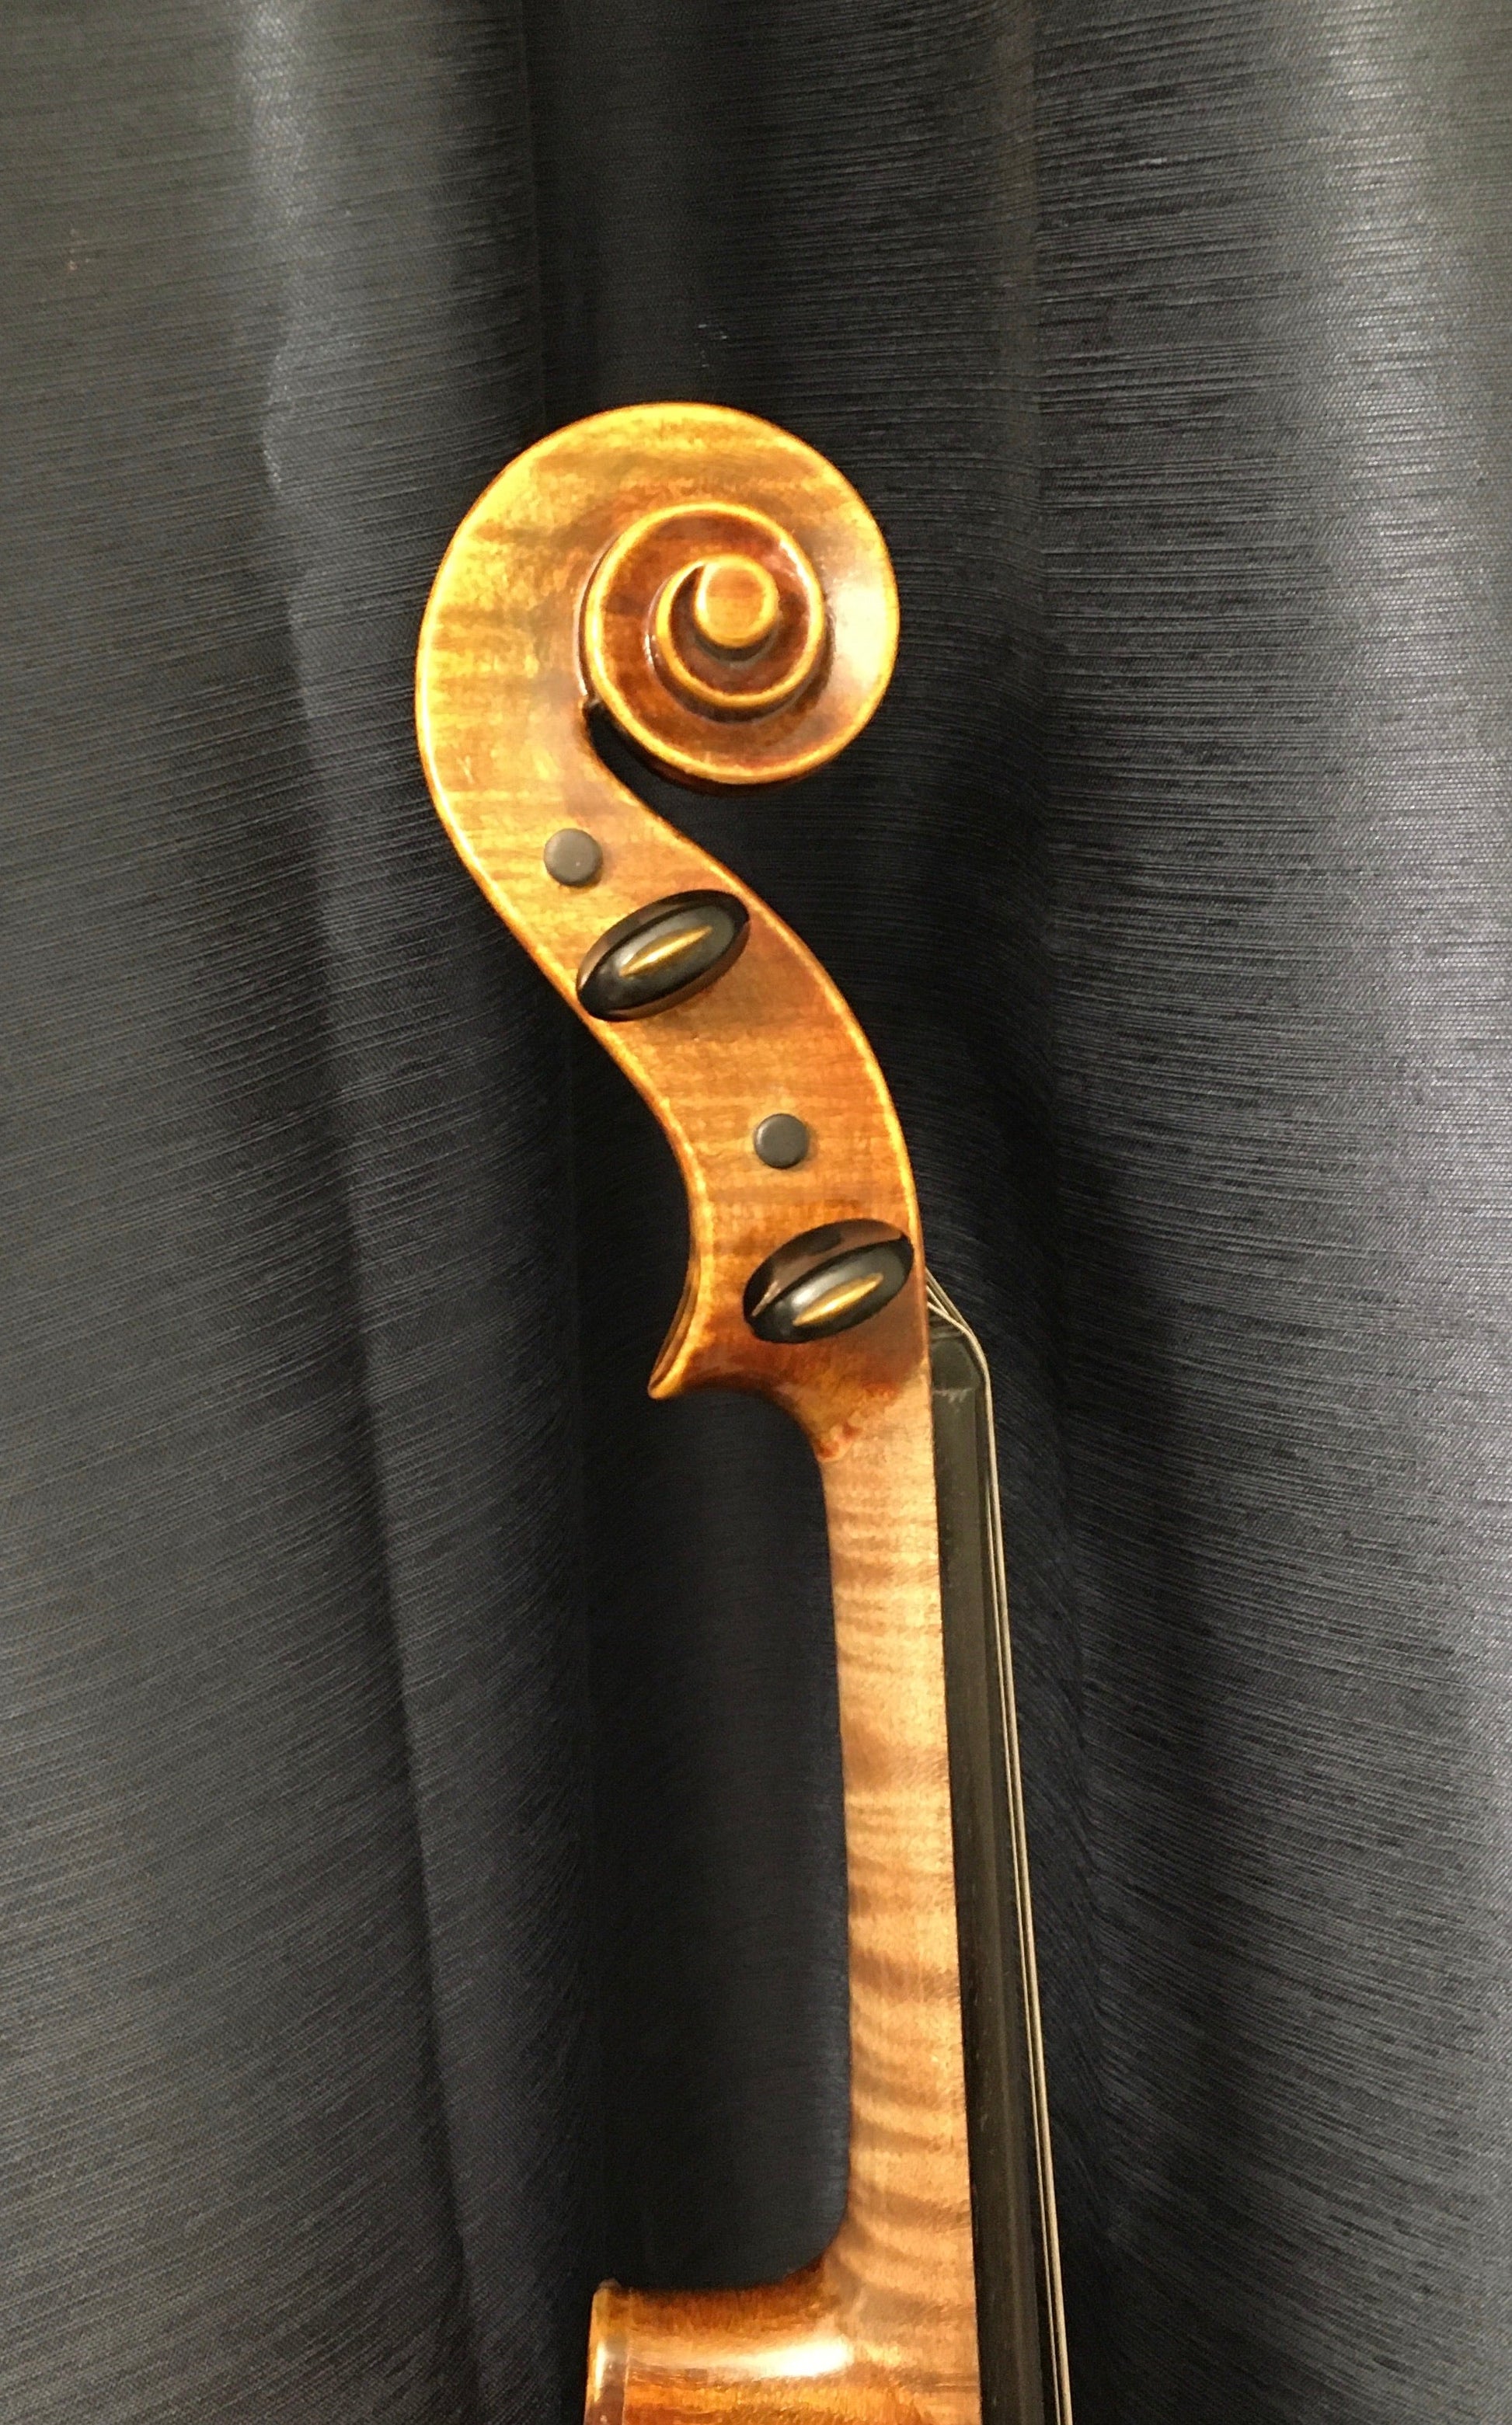 Filip Tomov - Handmade Viola Strings, Bows & More